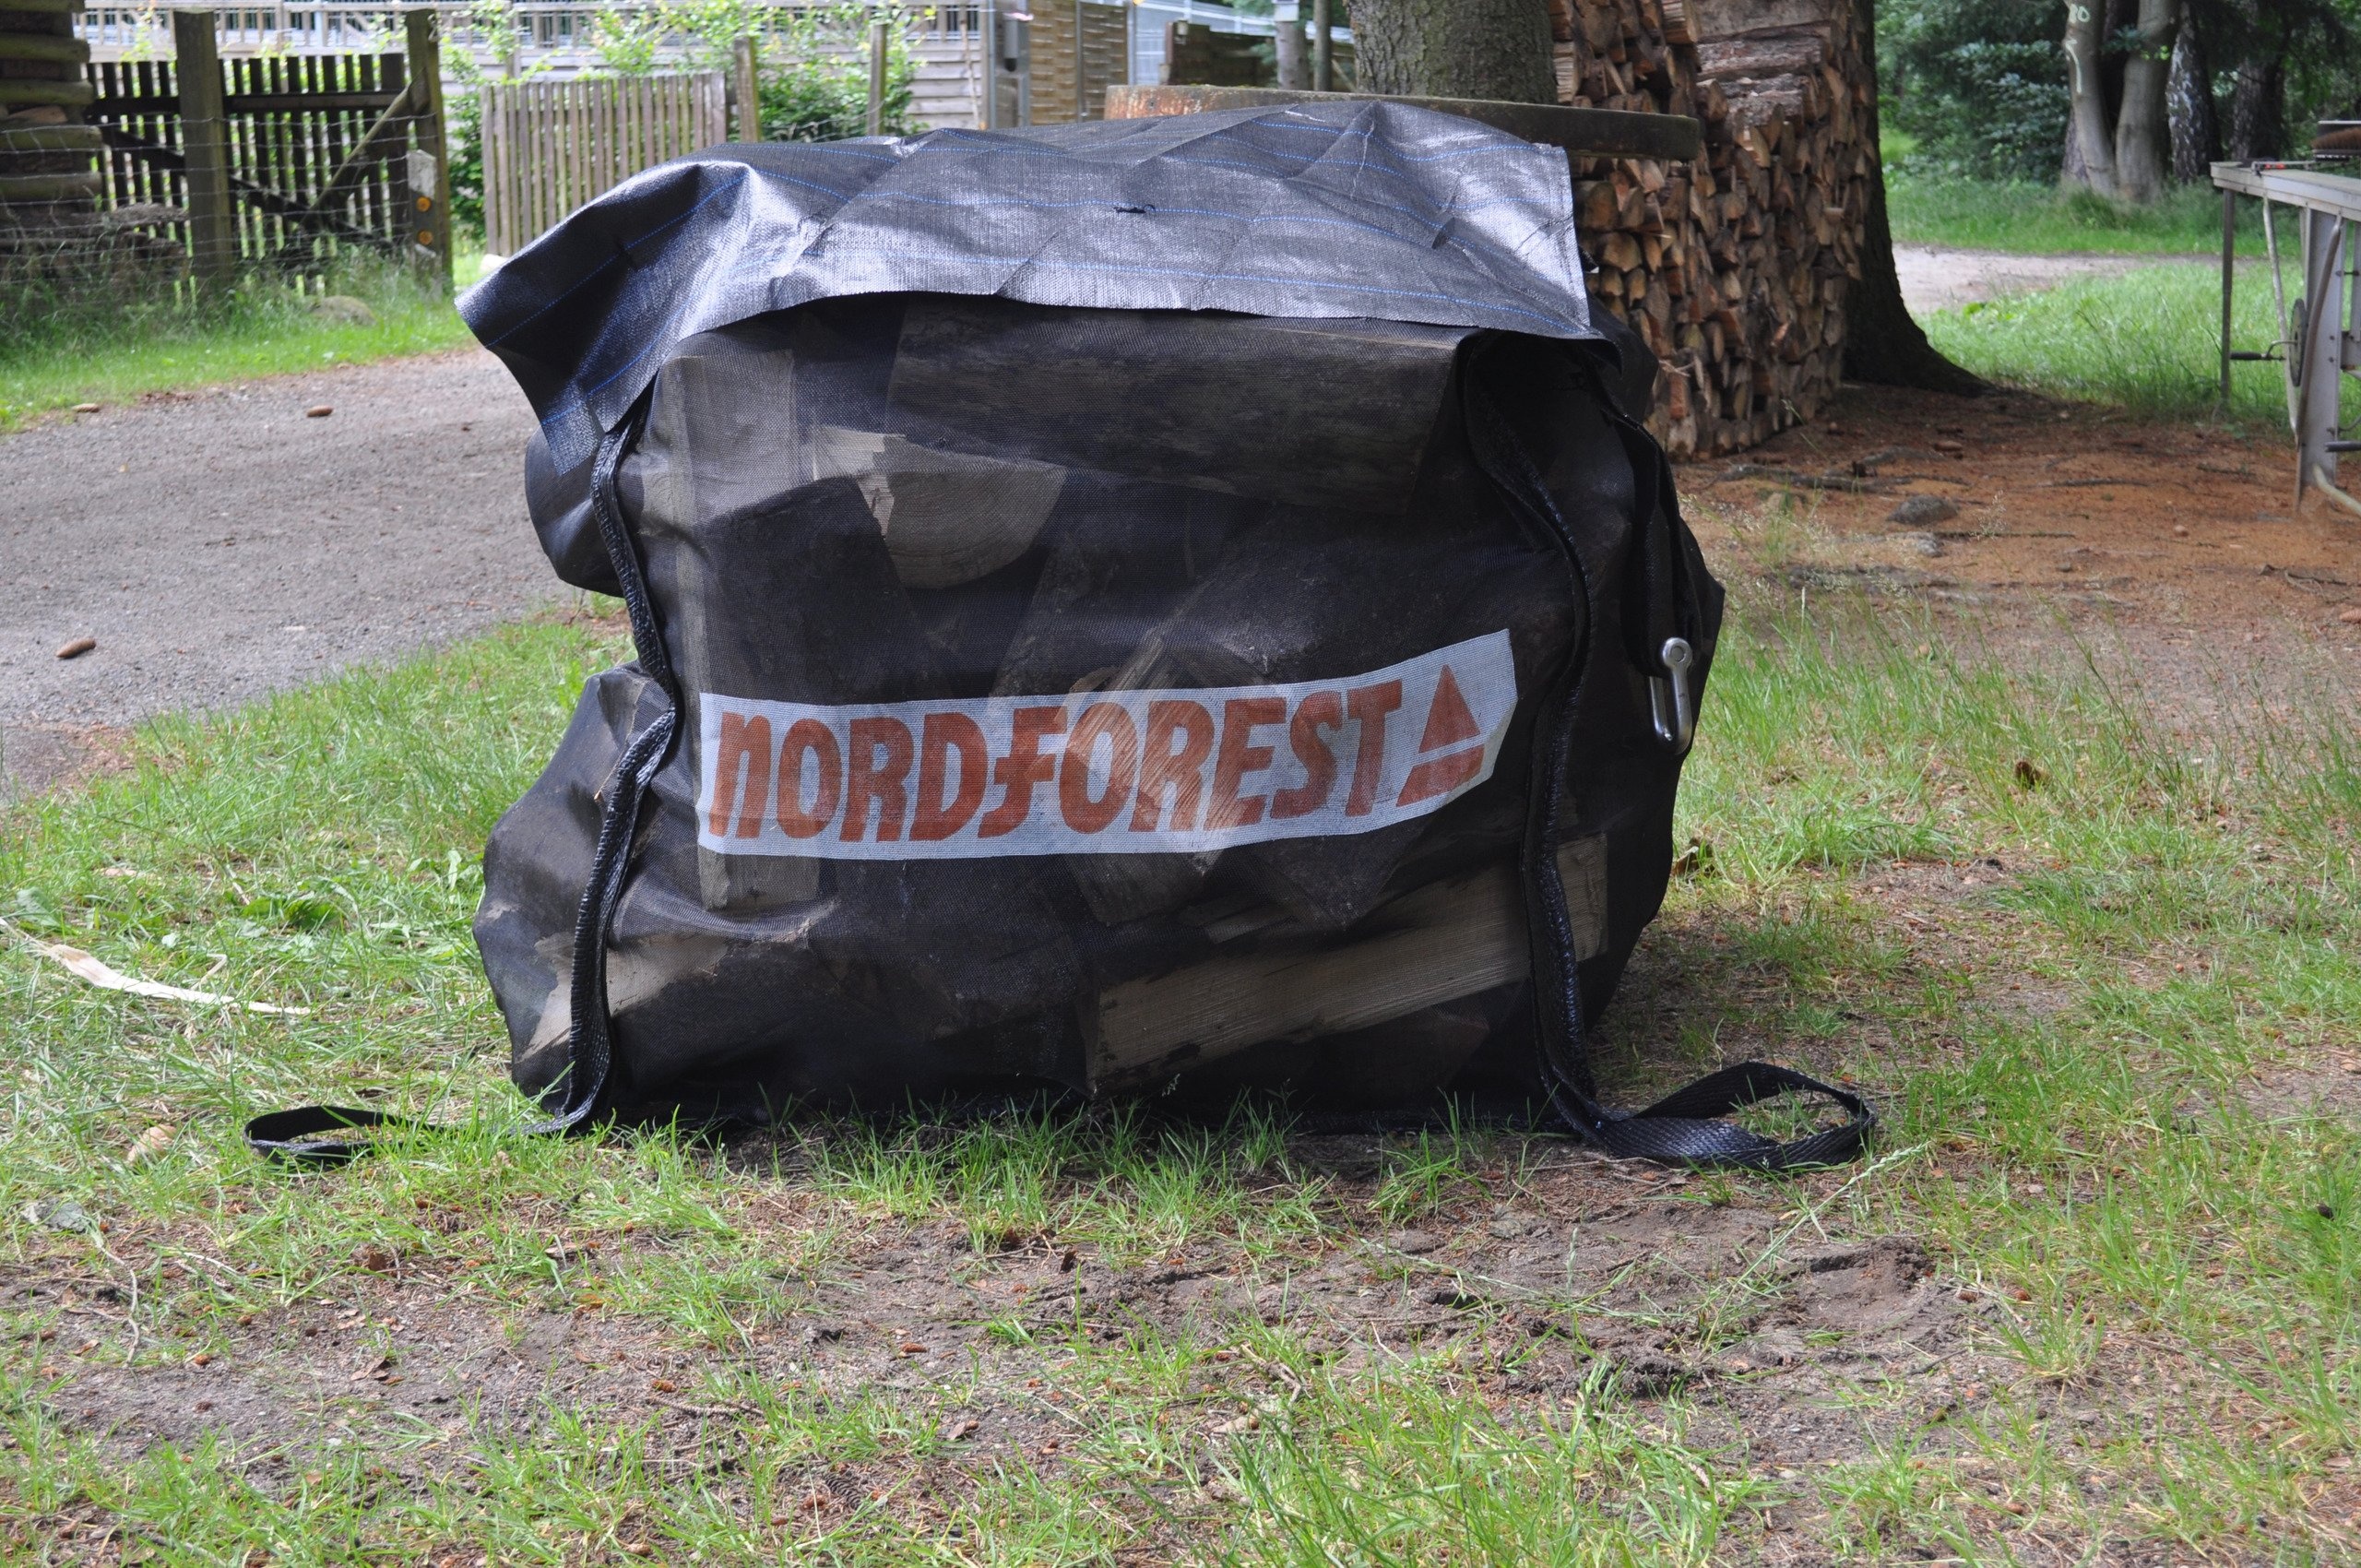 Nordforest Big-Bag für Brennholz